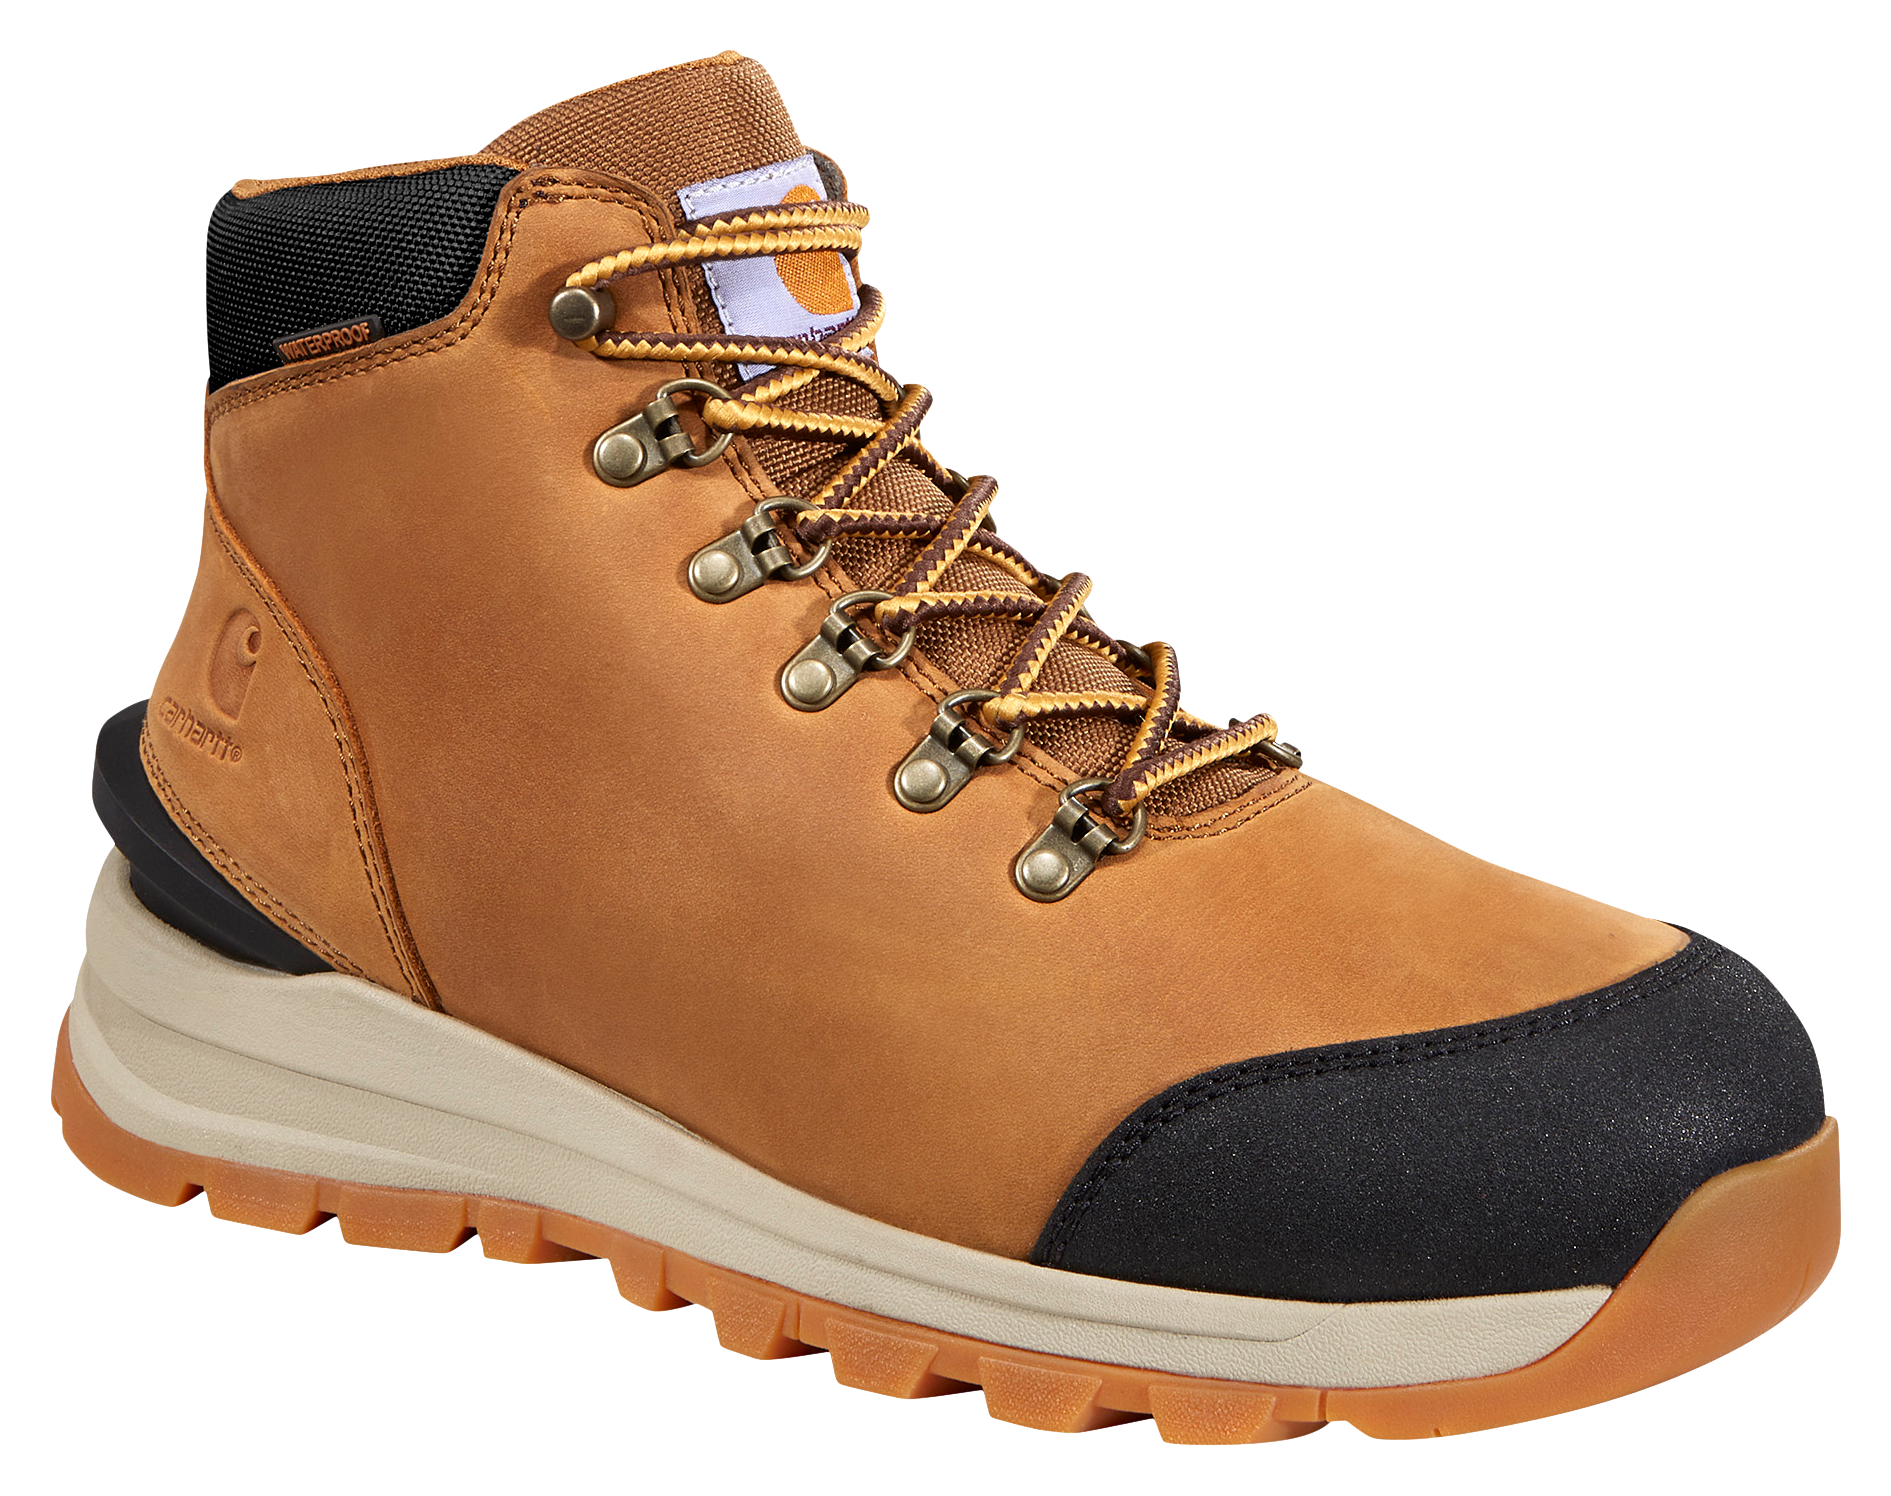 Carhartt Gilmore Waterproof Hiking Boots for Men - Brown - 15W